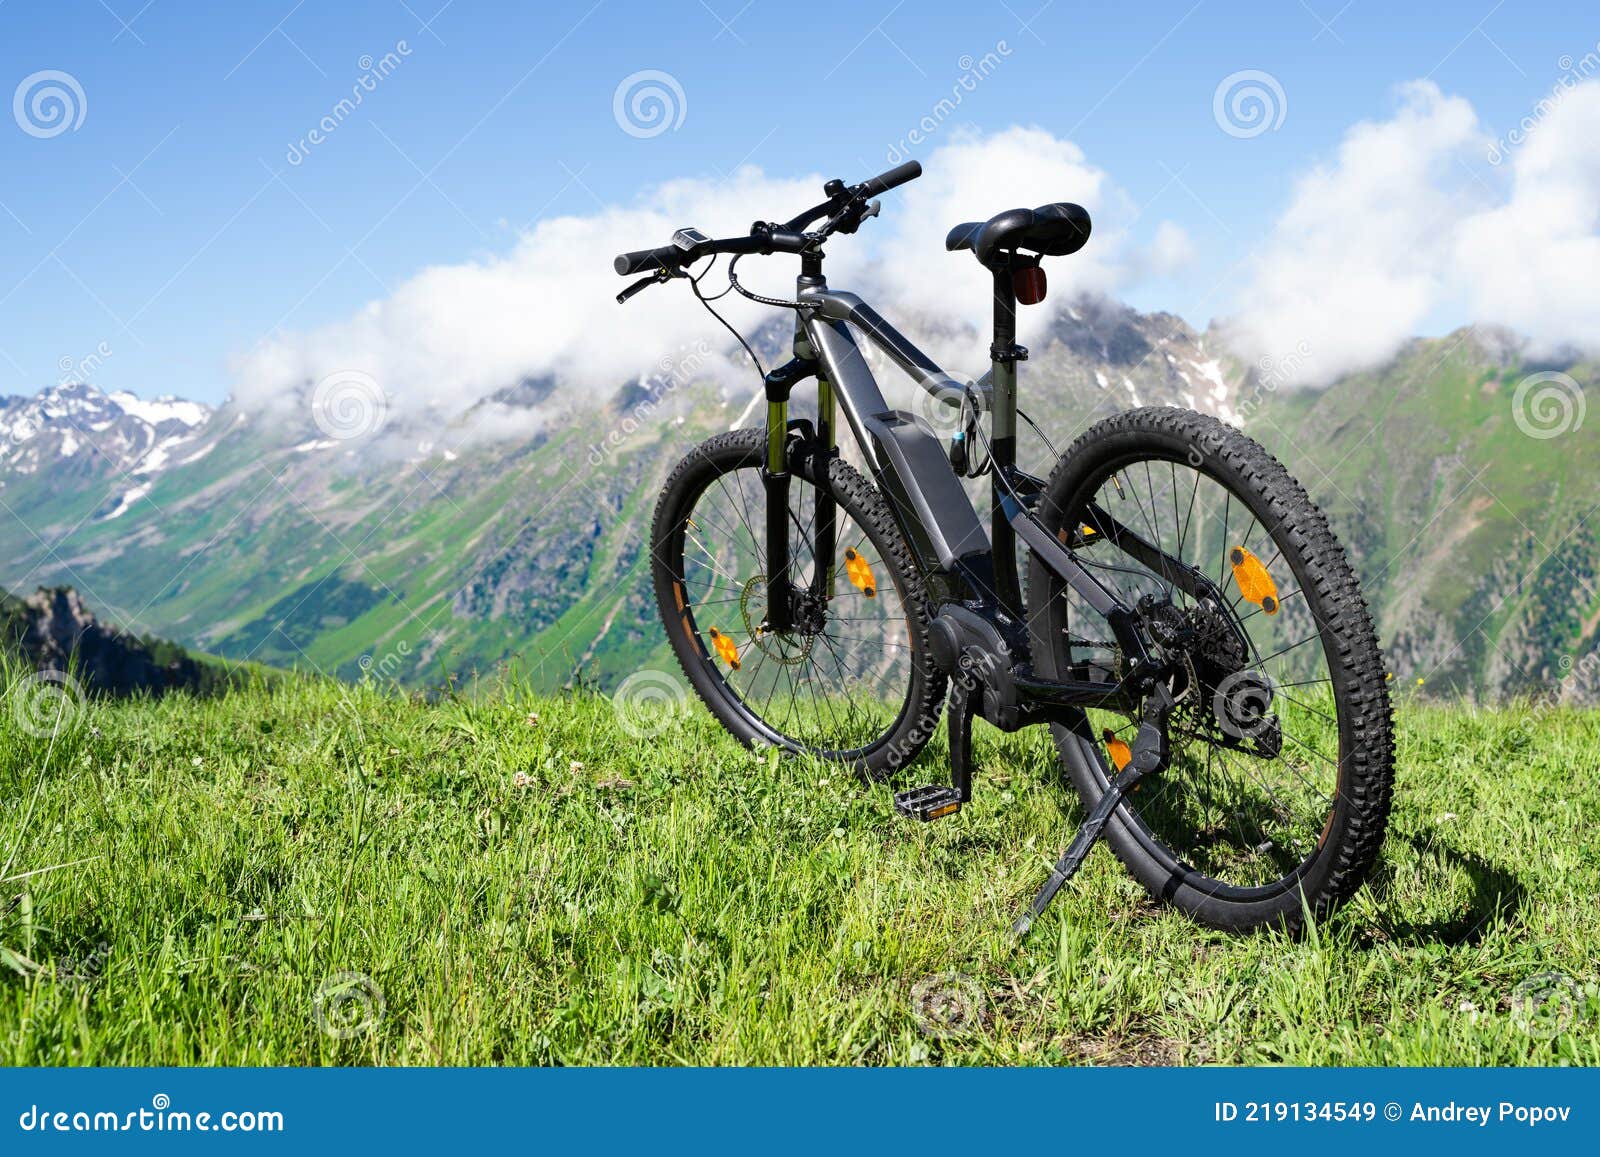 e bike in austria. ebike cycling